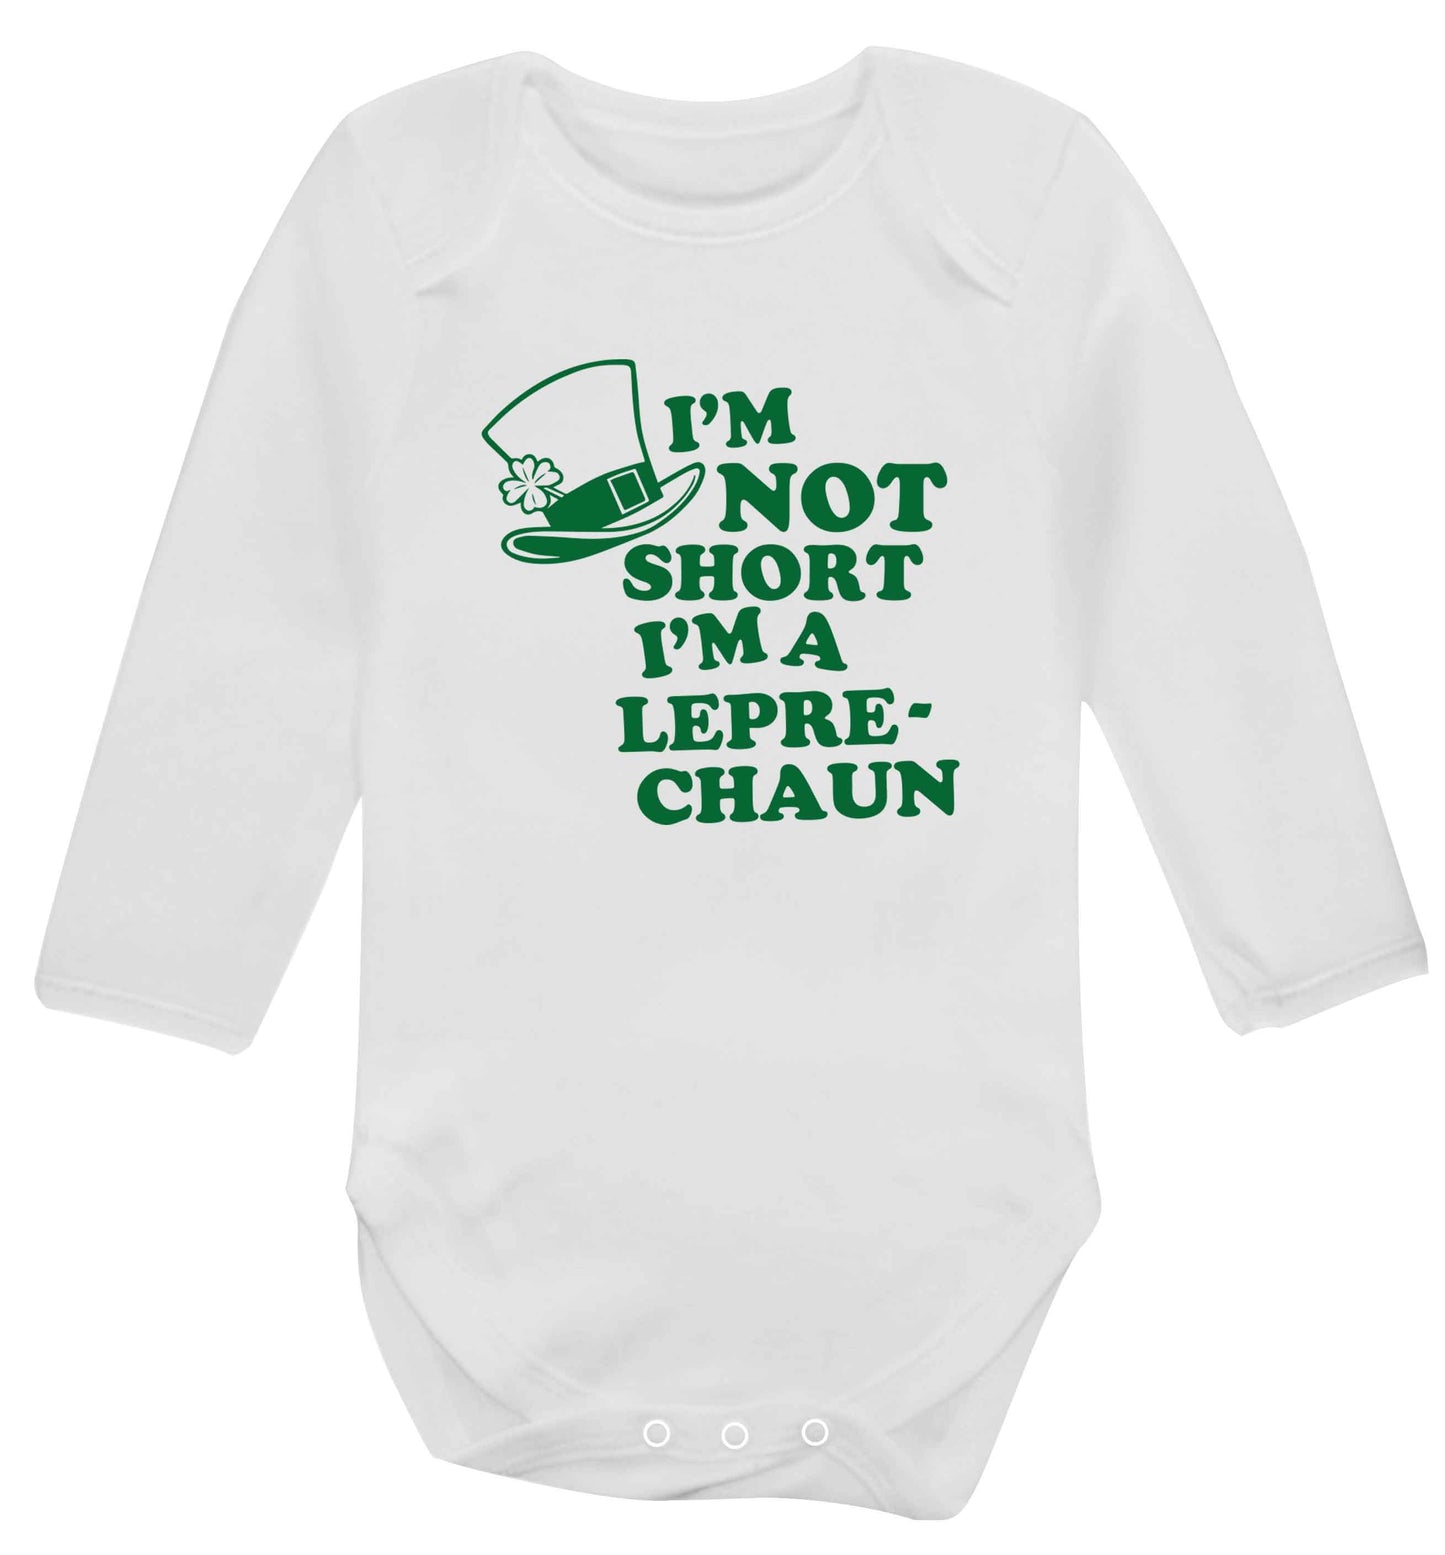 I'm not short I'm a leprechaun baby vest long sleeved white 6-12 months